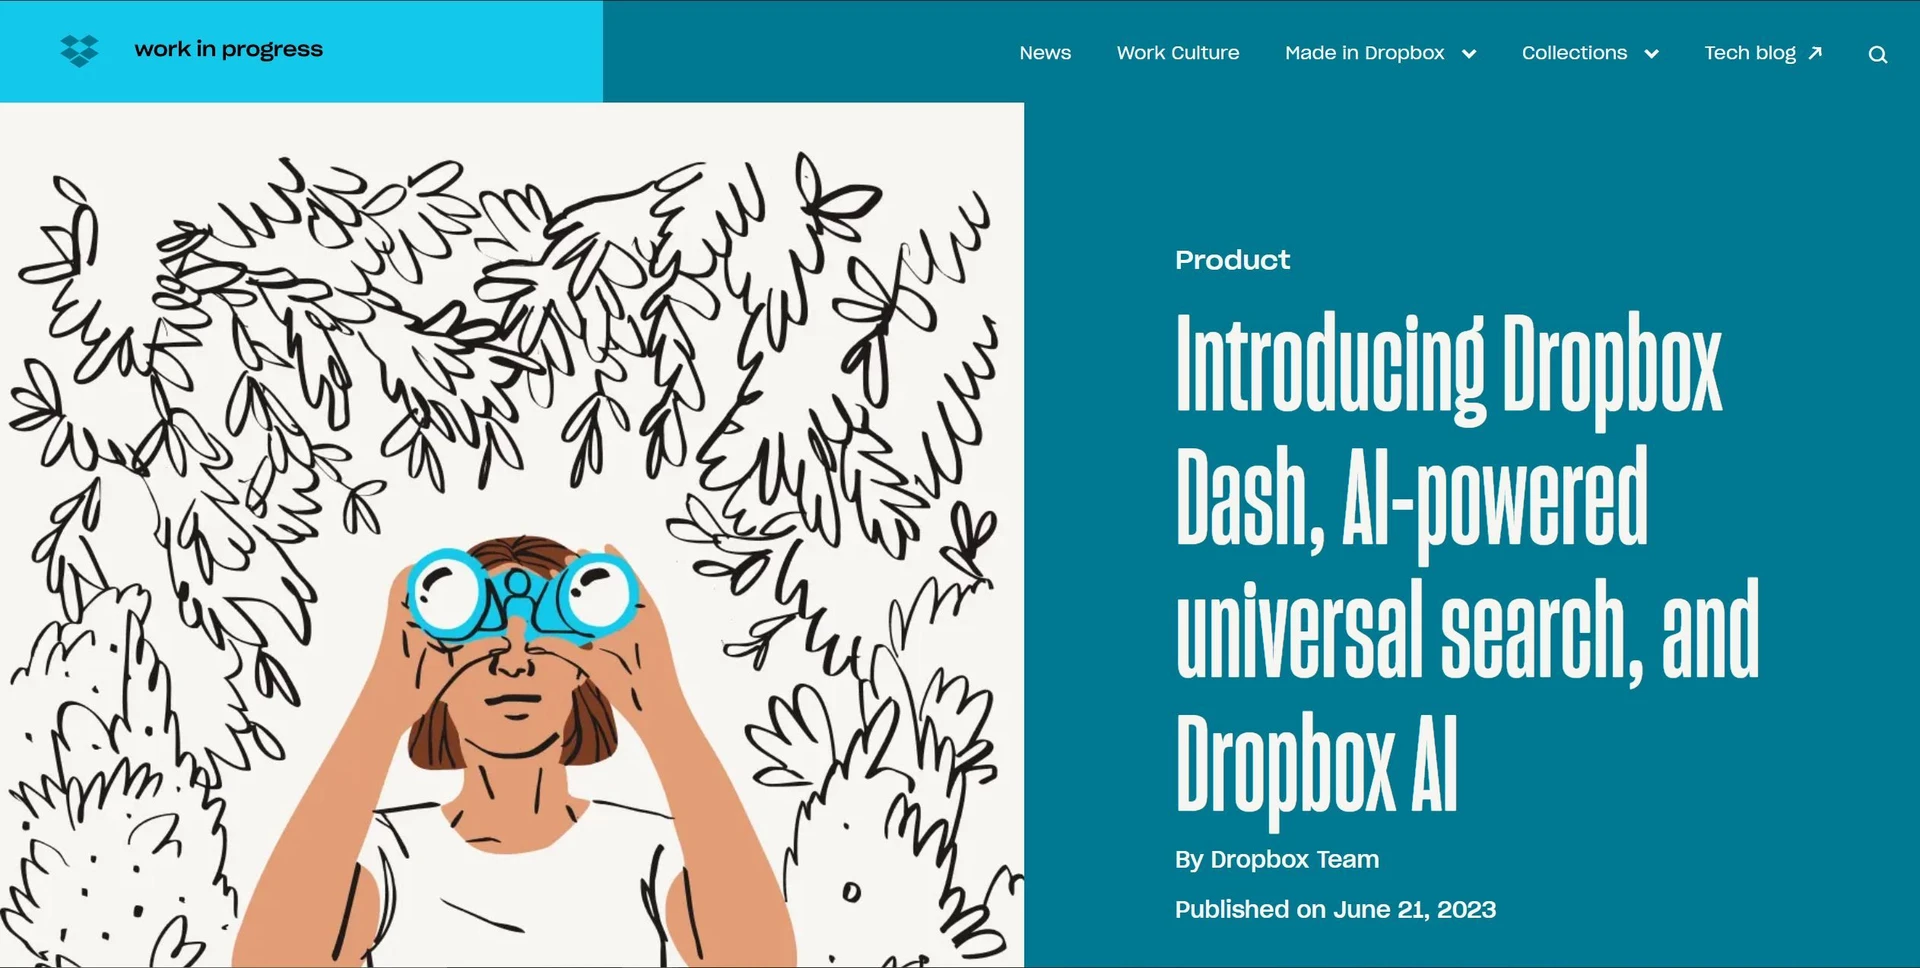 Dropbox AIwebsite picture